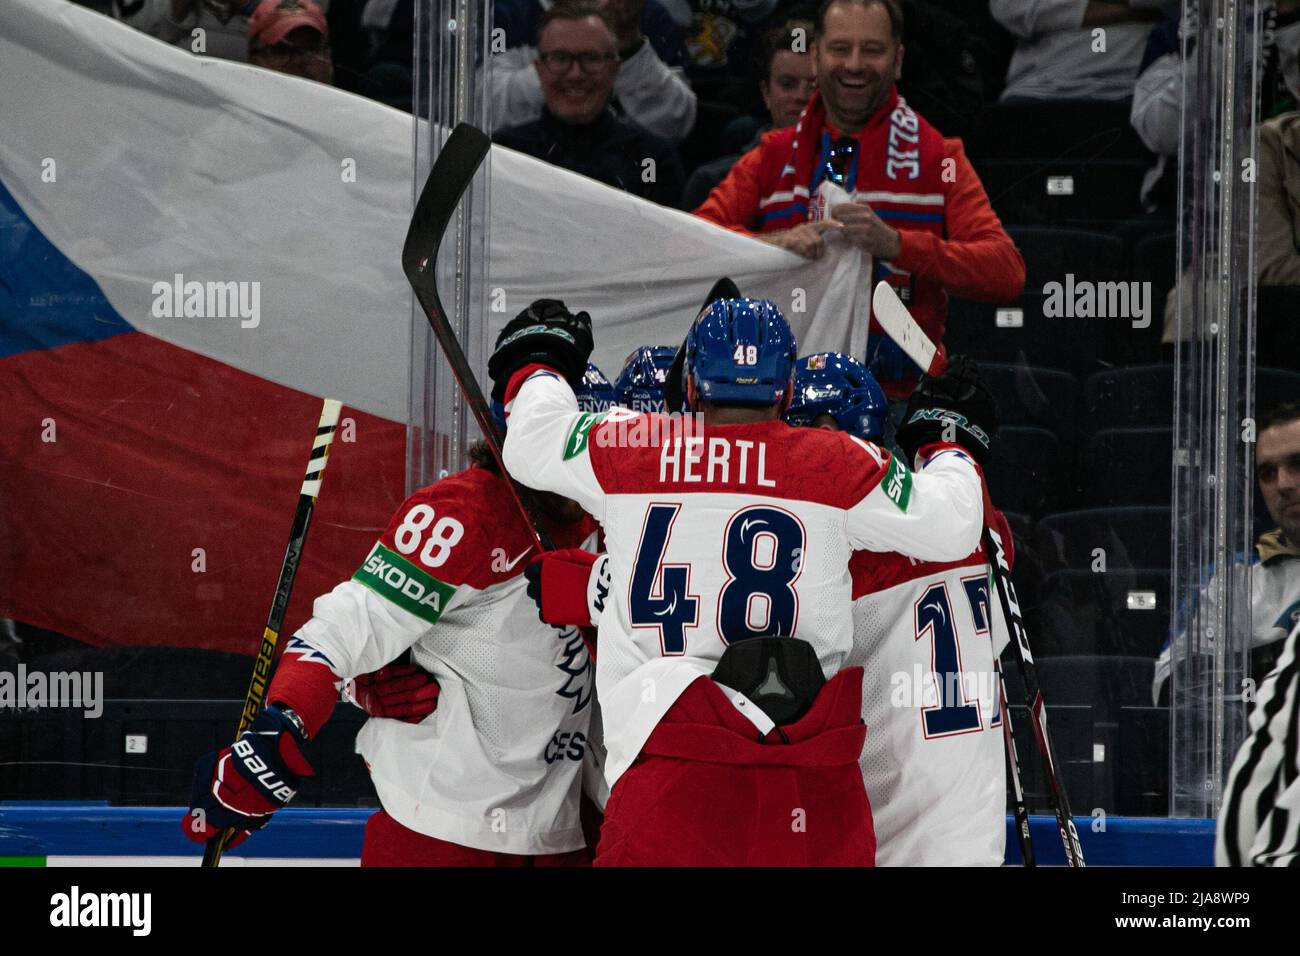 Ice hockey iihf ica hockey world championship hi-res stock photography and images